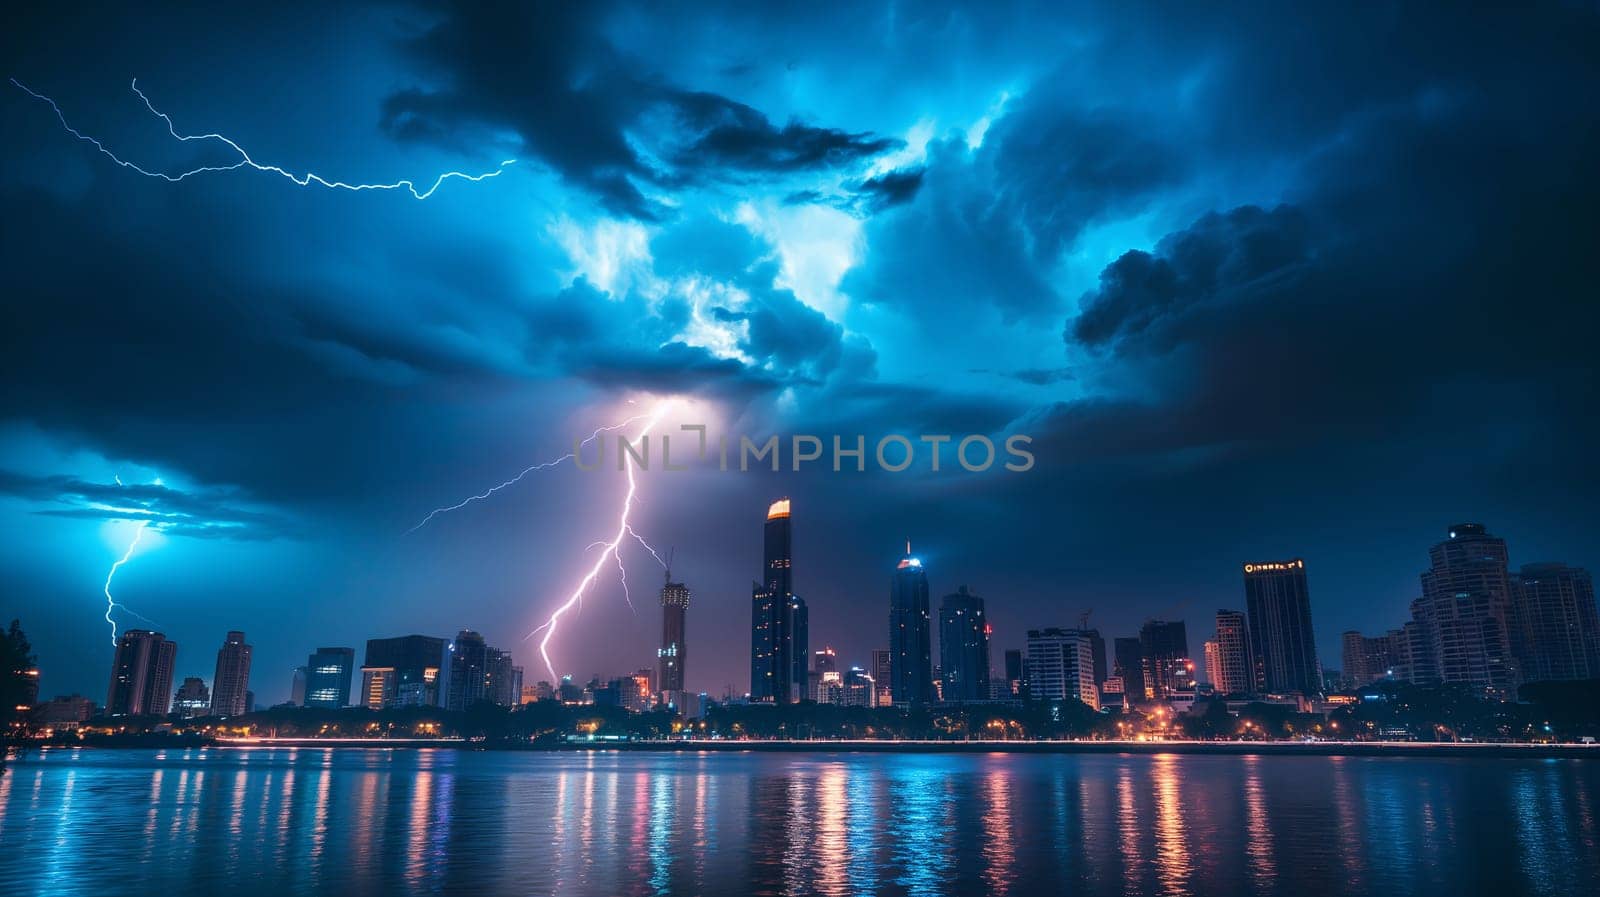 Lightning Storm Over City at Night by chrisroll